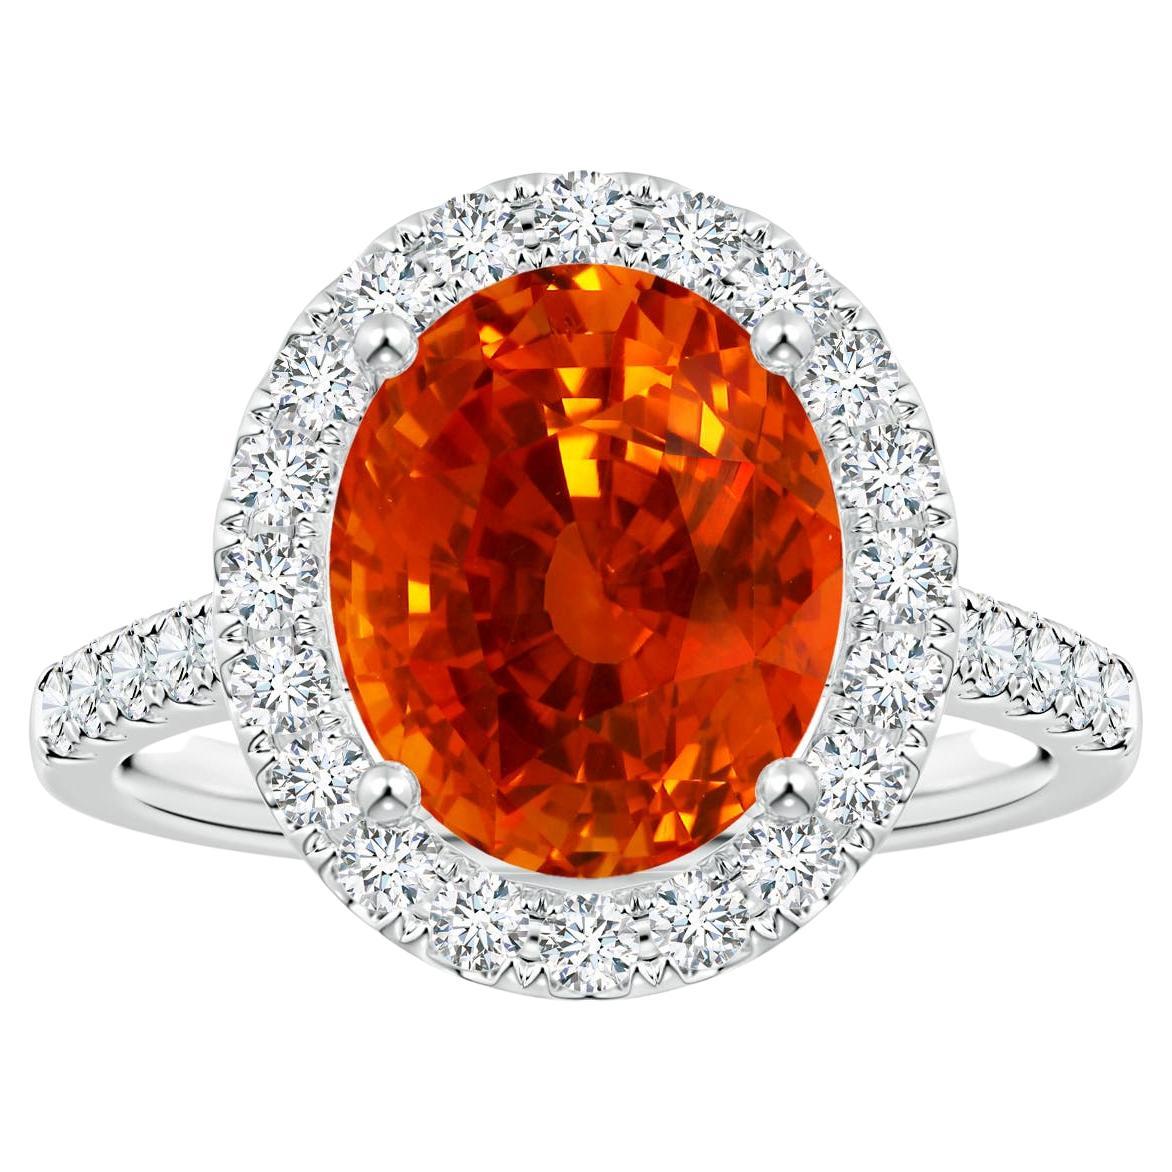 ANGARA Bague halo de saphir orange naturel certifié GIA et diamants